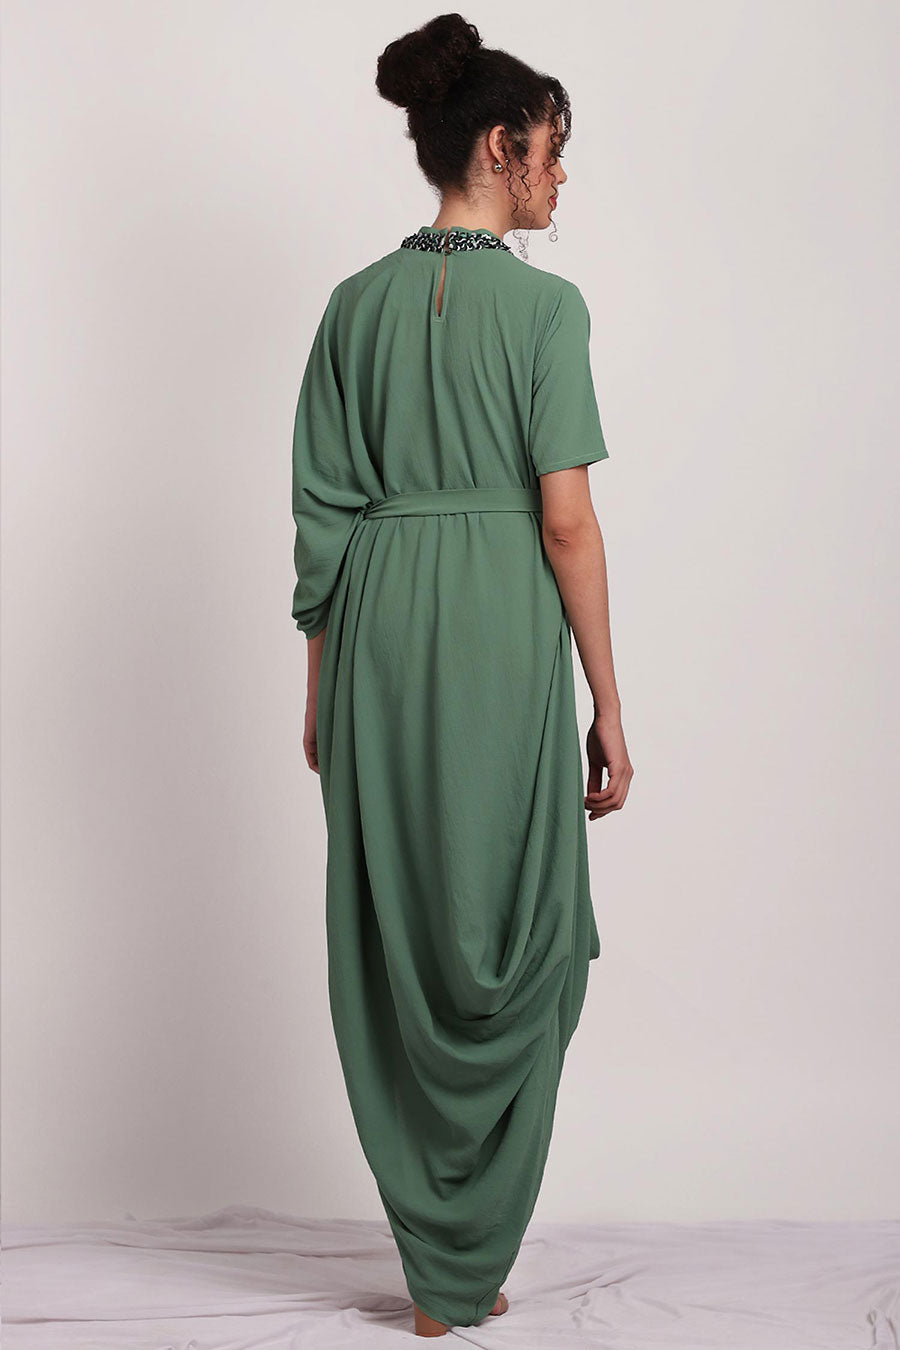 Fern Cowl Green Dress